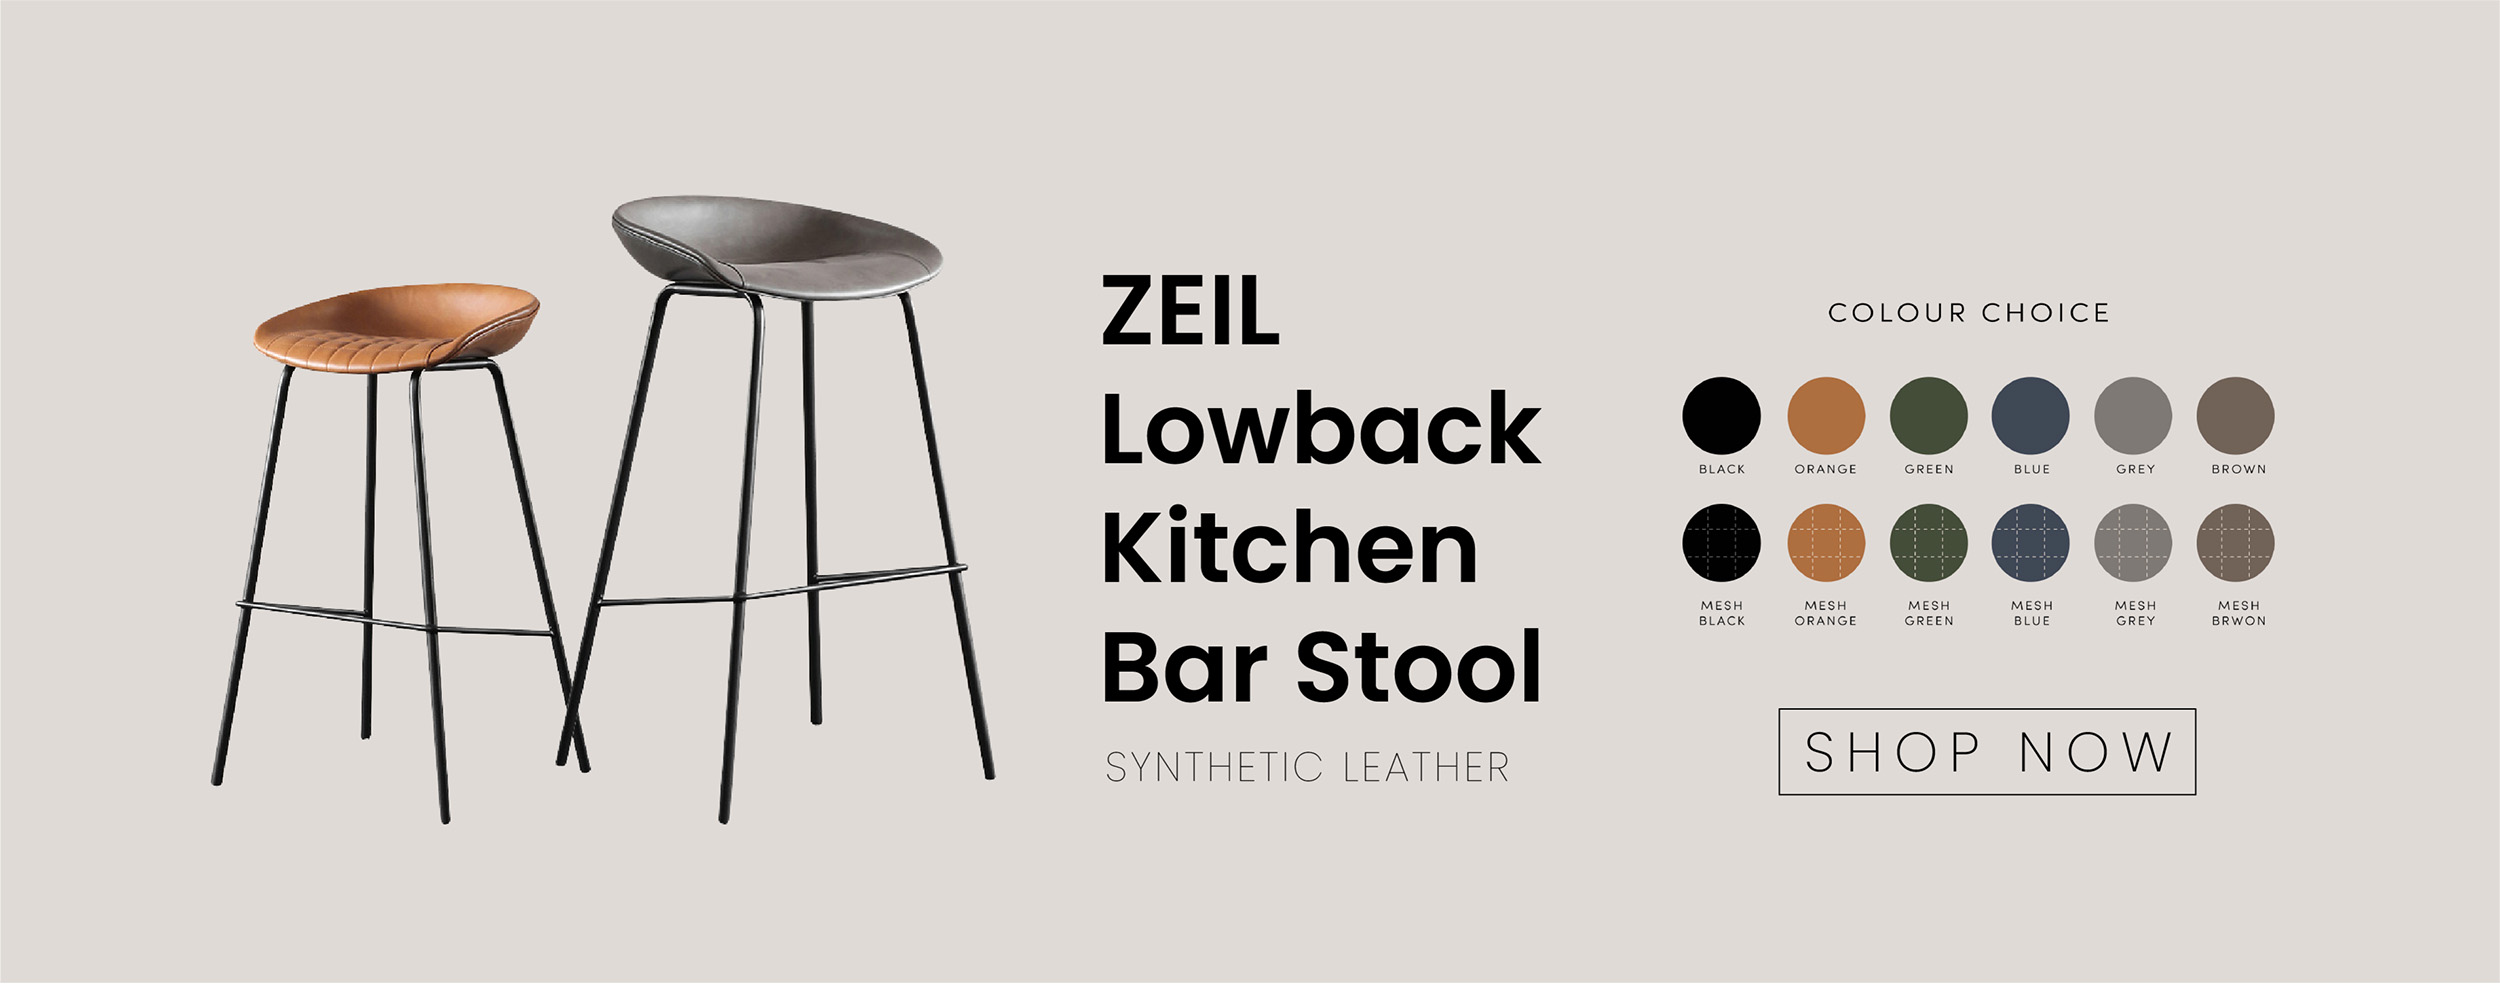 ZEIL Lowback Kitchen Bar Stool